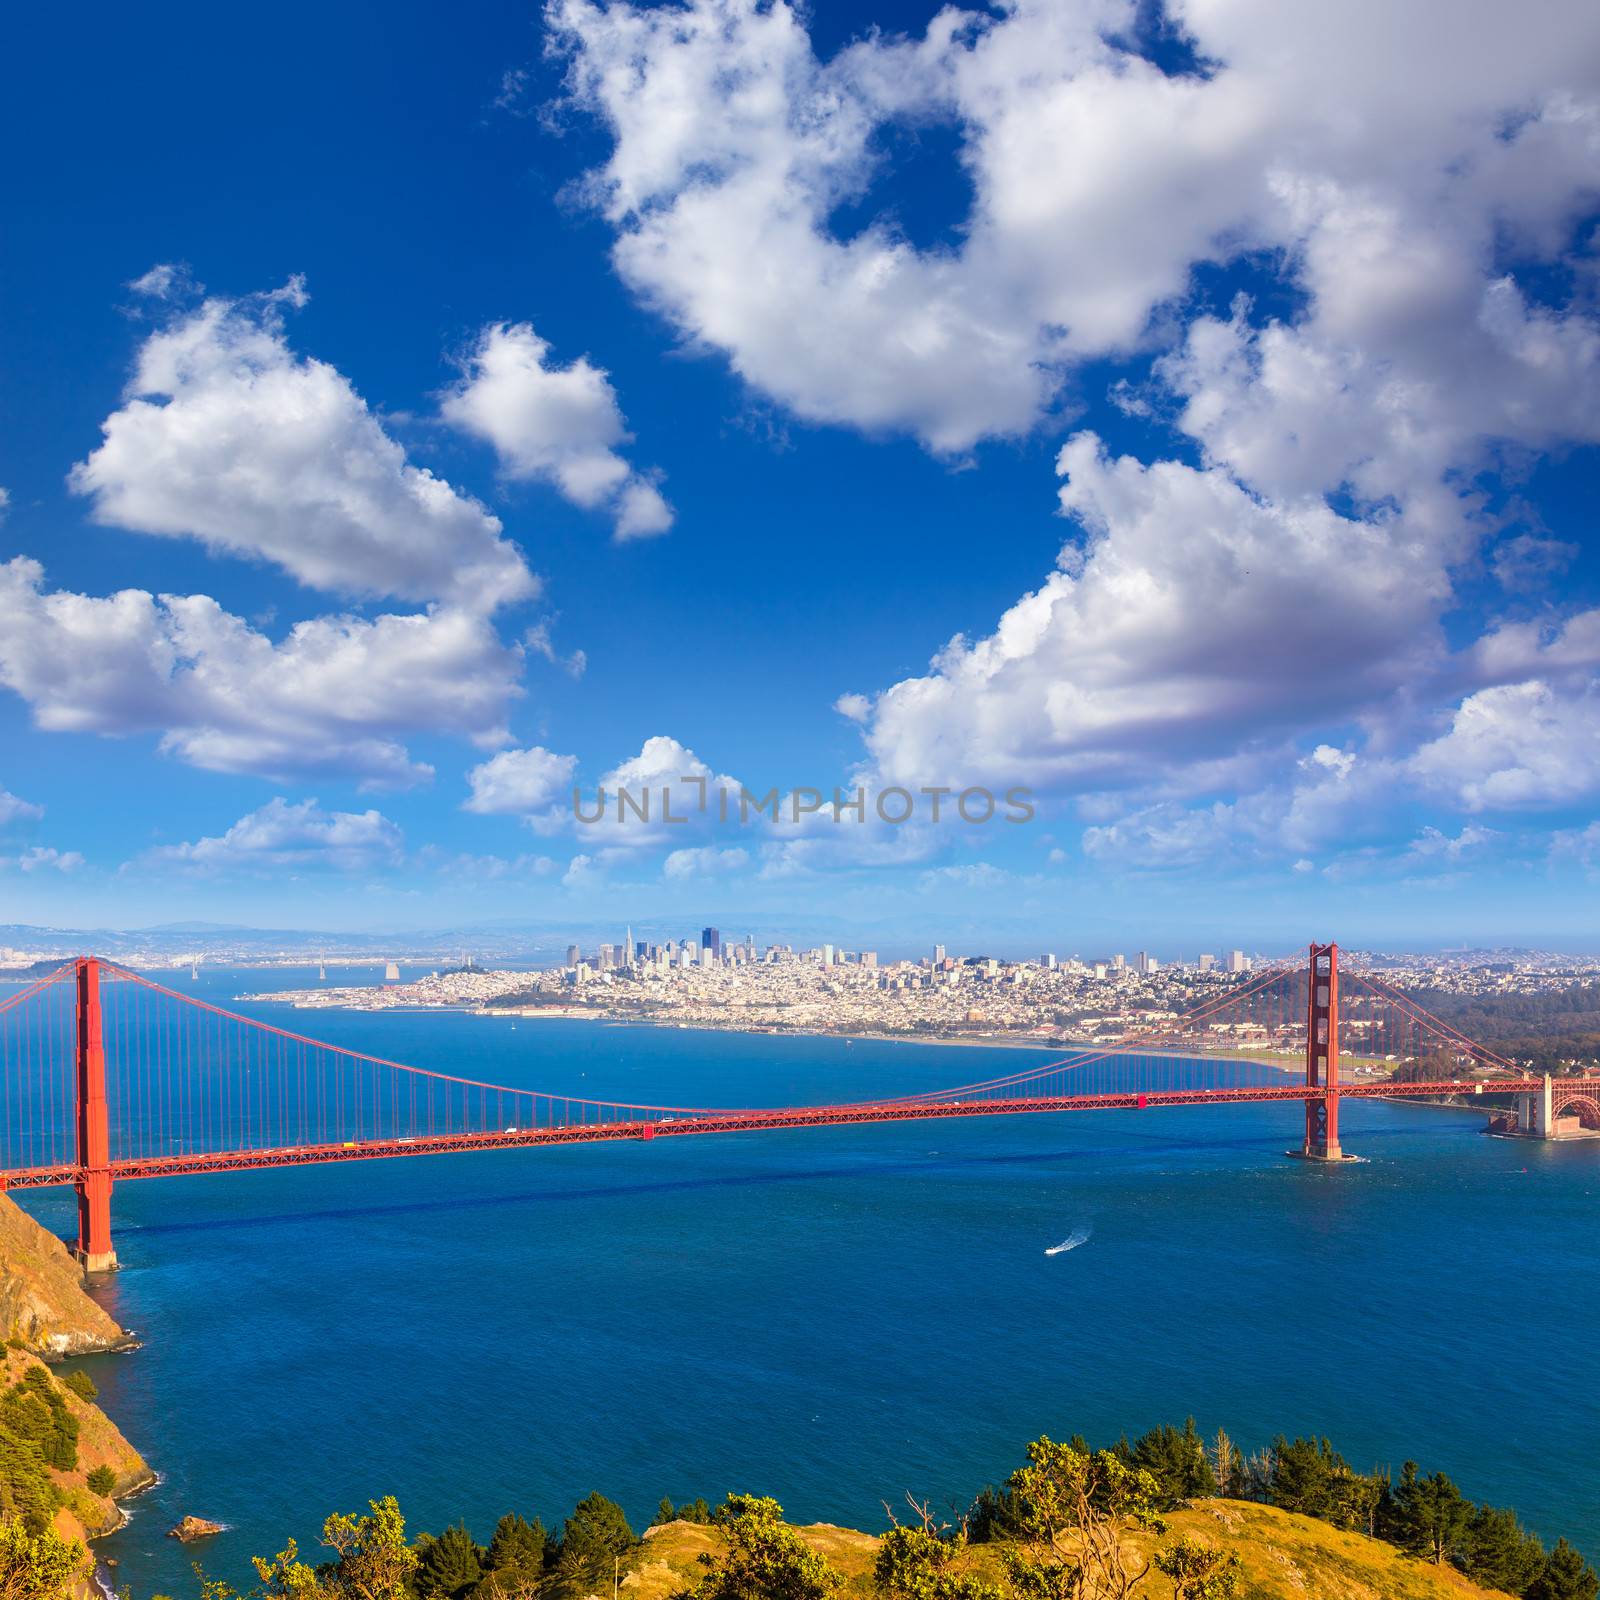 San Francisco Golden Gate Bridge Marin headlands California by lunamarina